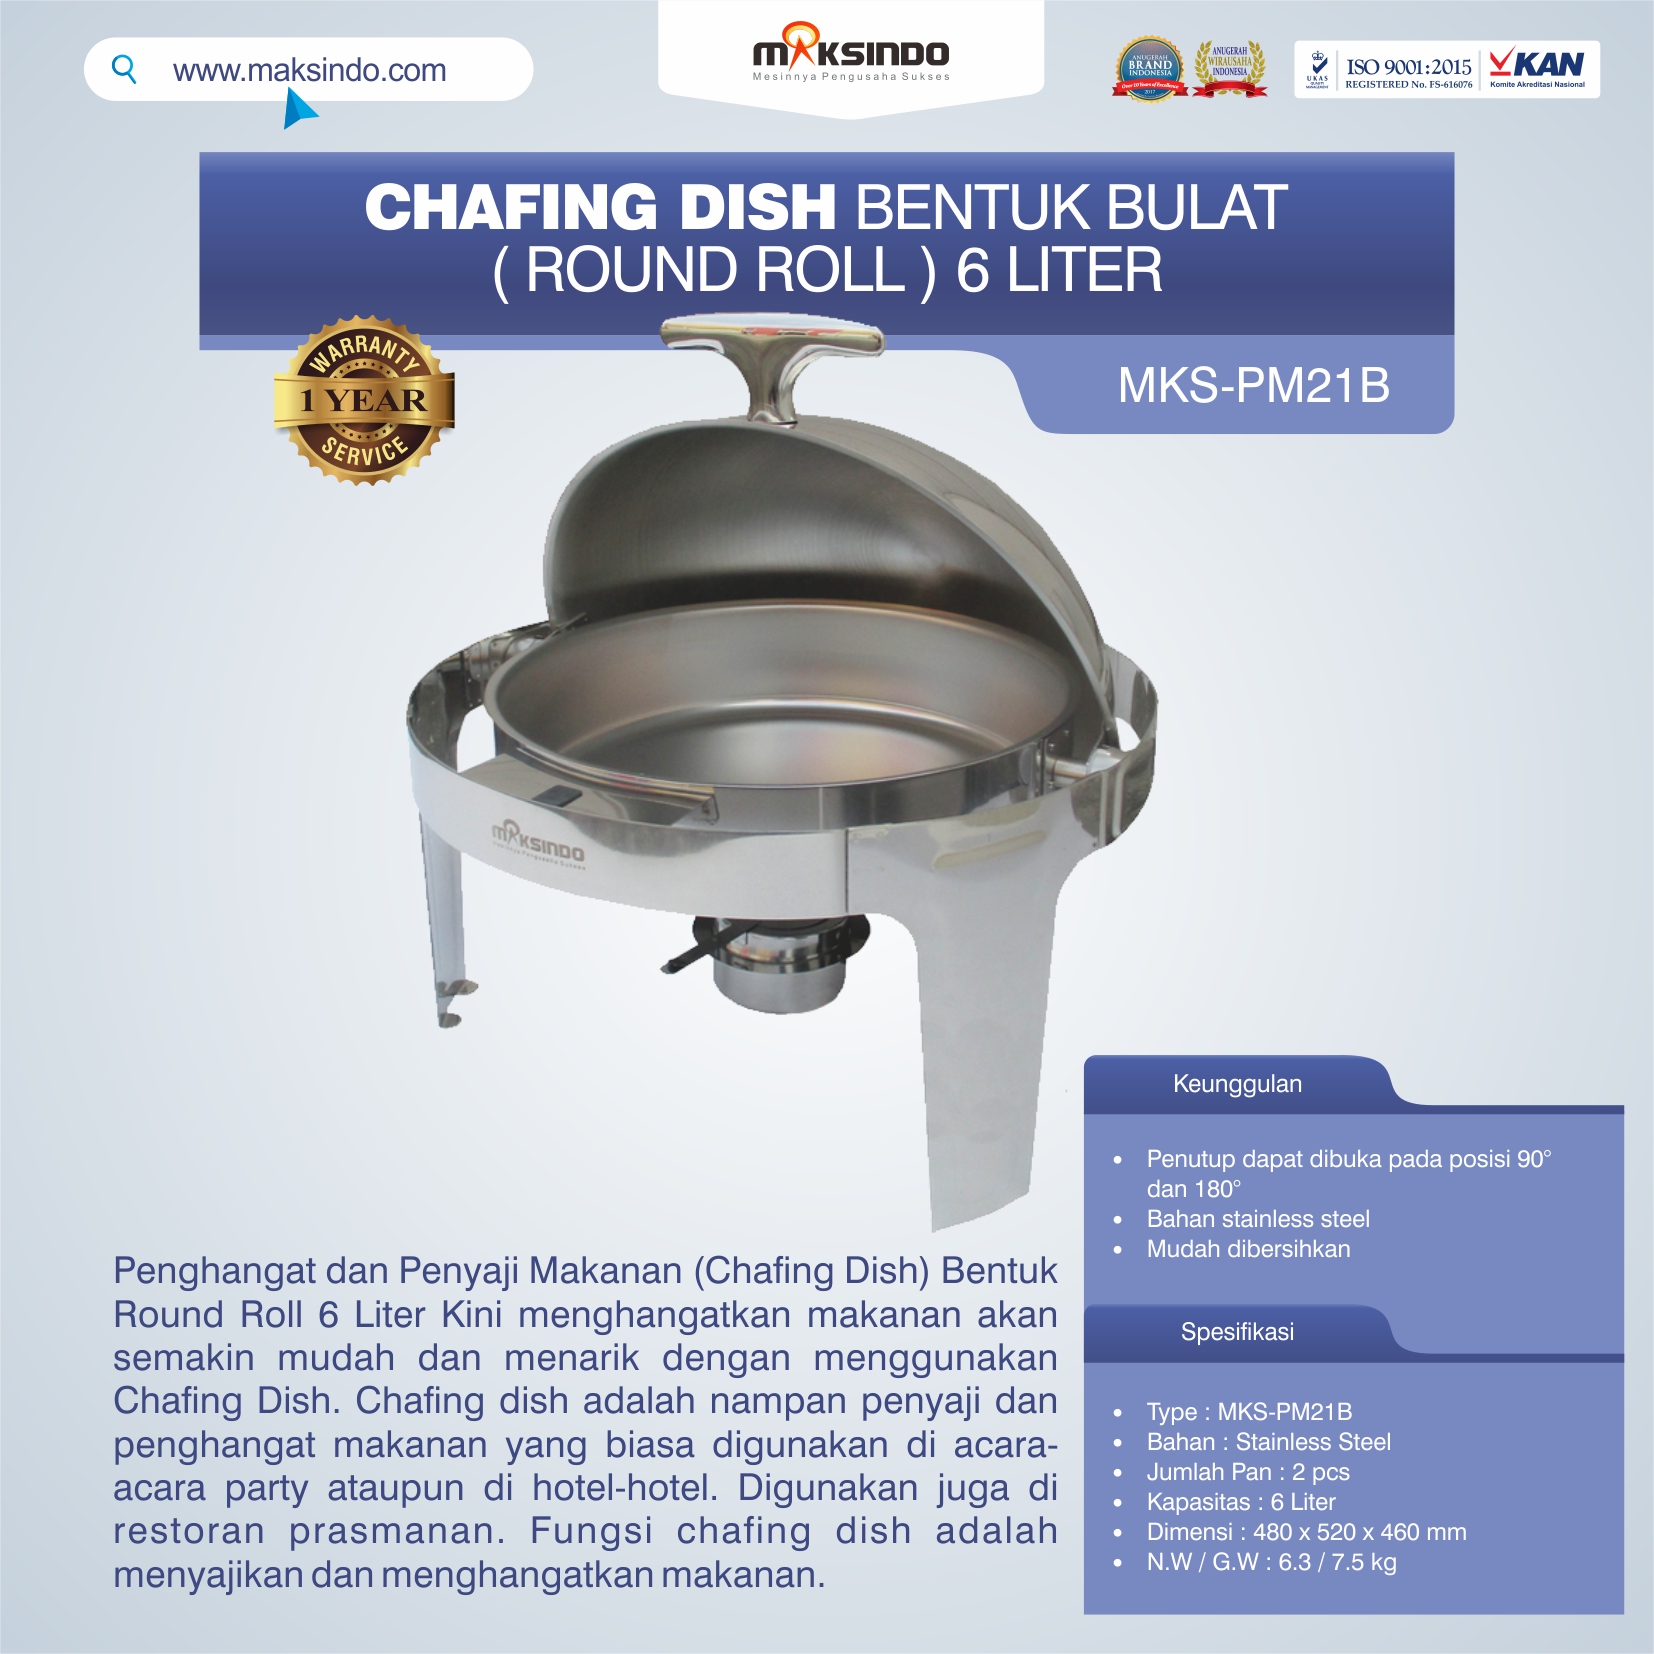 Jual Chafing Dish Bentuk Bulat (Round Roll) 6 Liter di Makassar